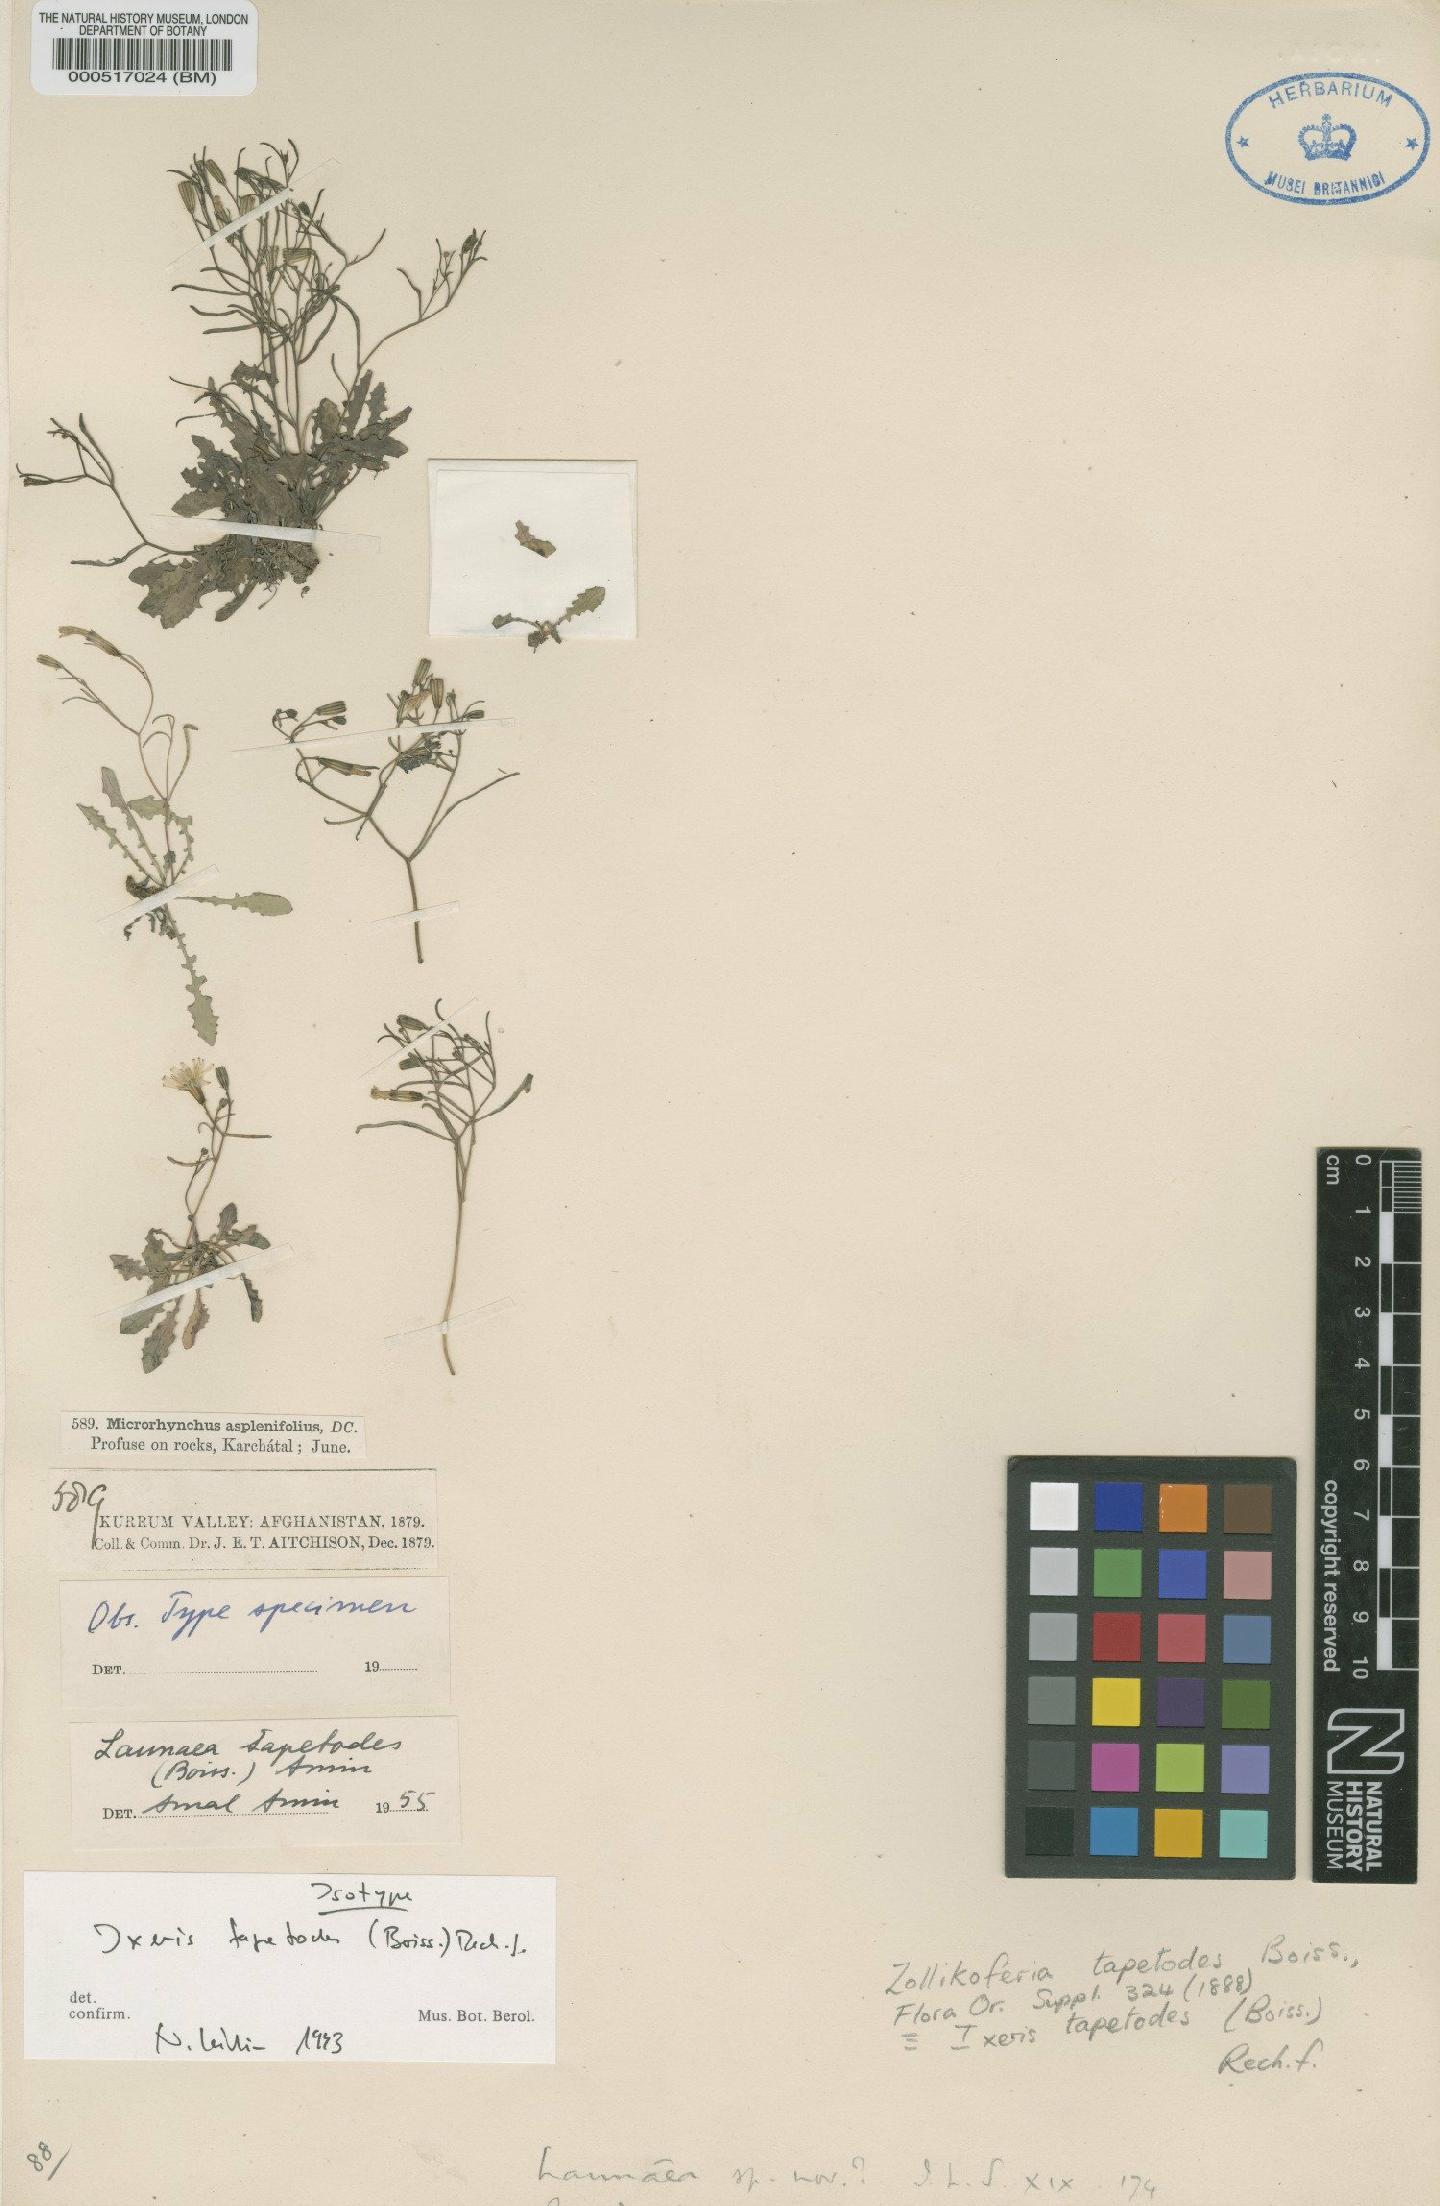 To NHMUK collection (Launaea tapetodes (Boiss.) Amin; Isotype; NHMUK:ecatalogue:4970918)